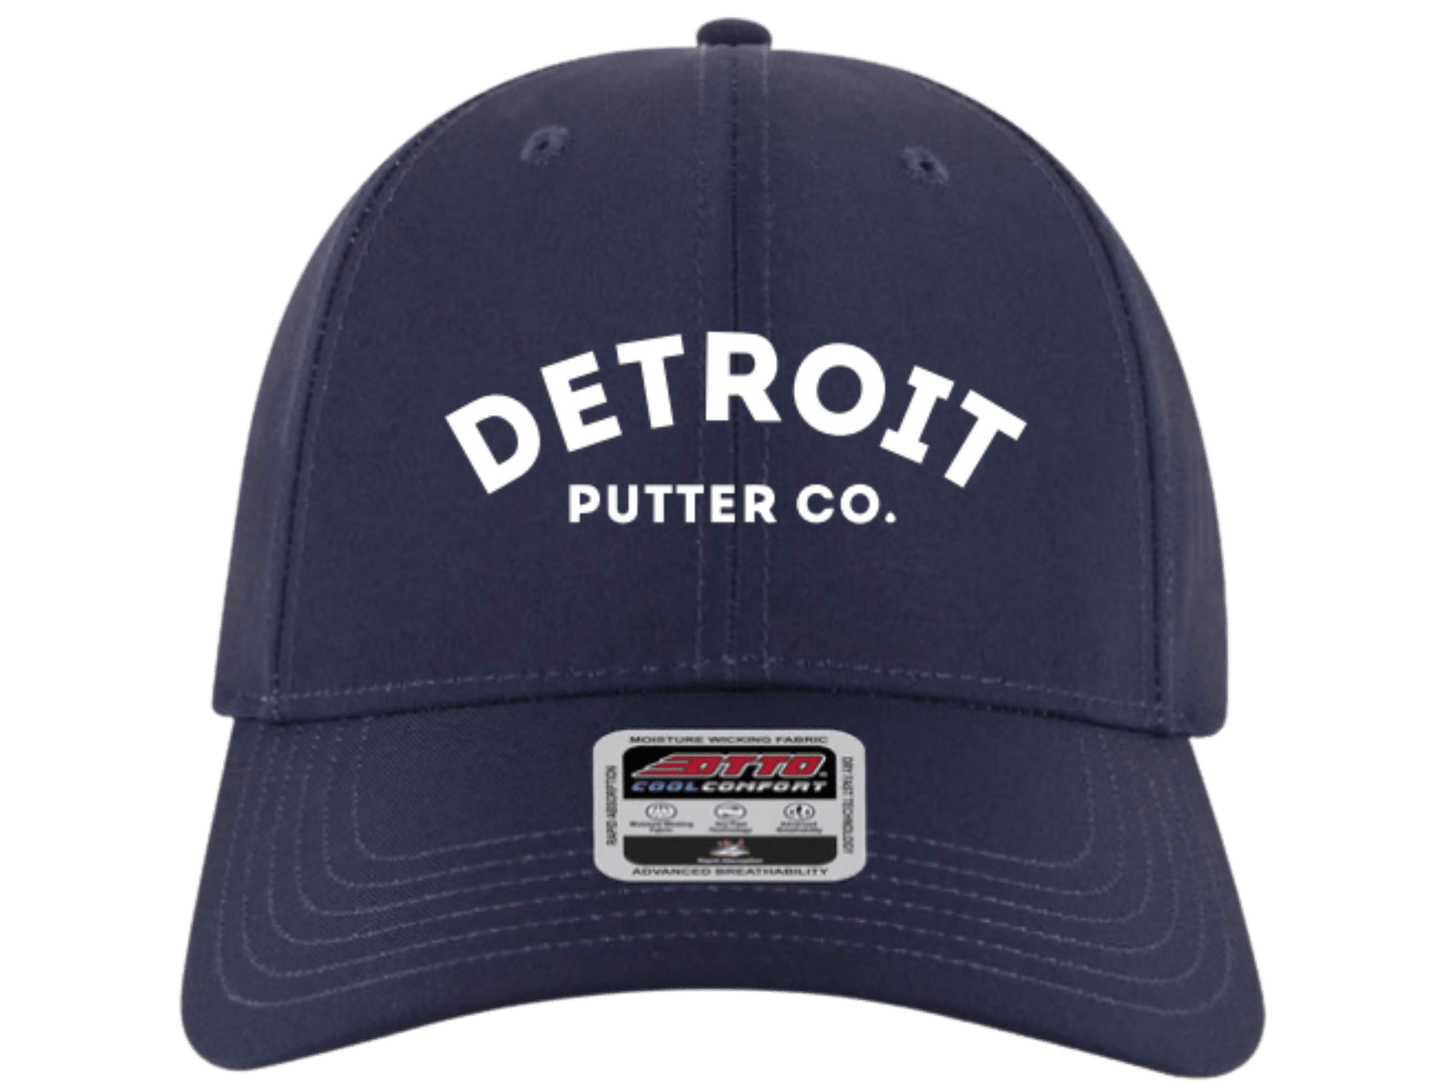 DETROIT PUTTER CO. MESH TRUCKER HAT